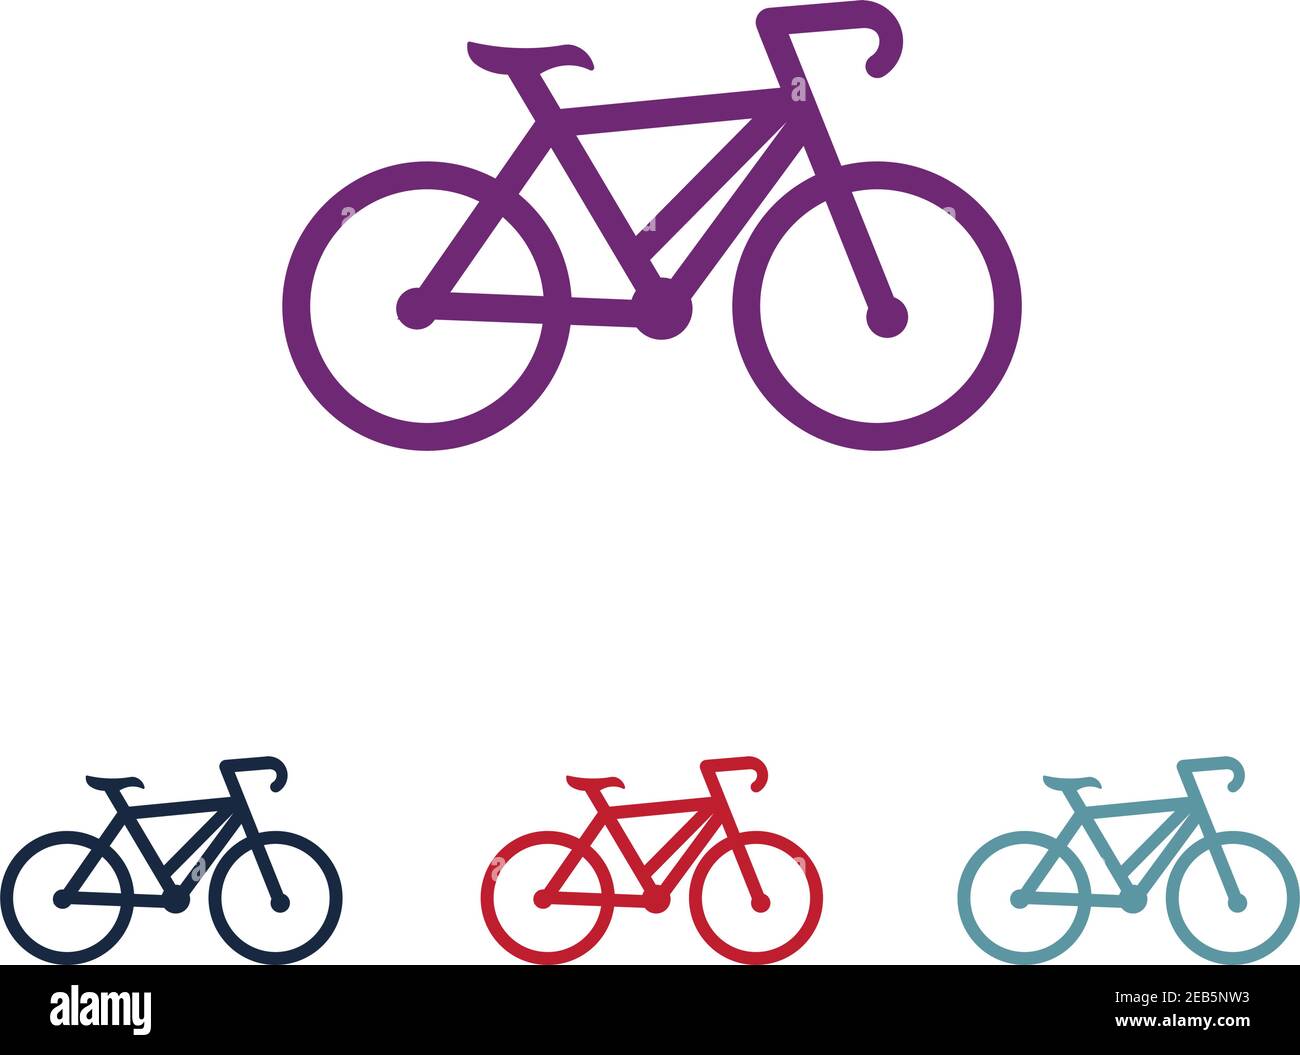 Bicycle logo vector template Stock Vector